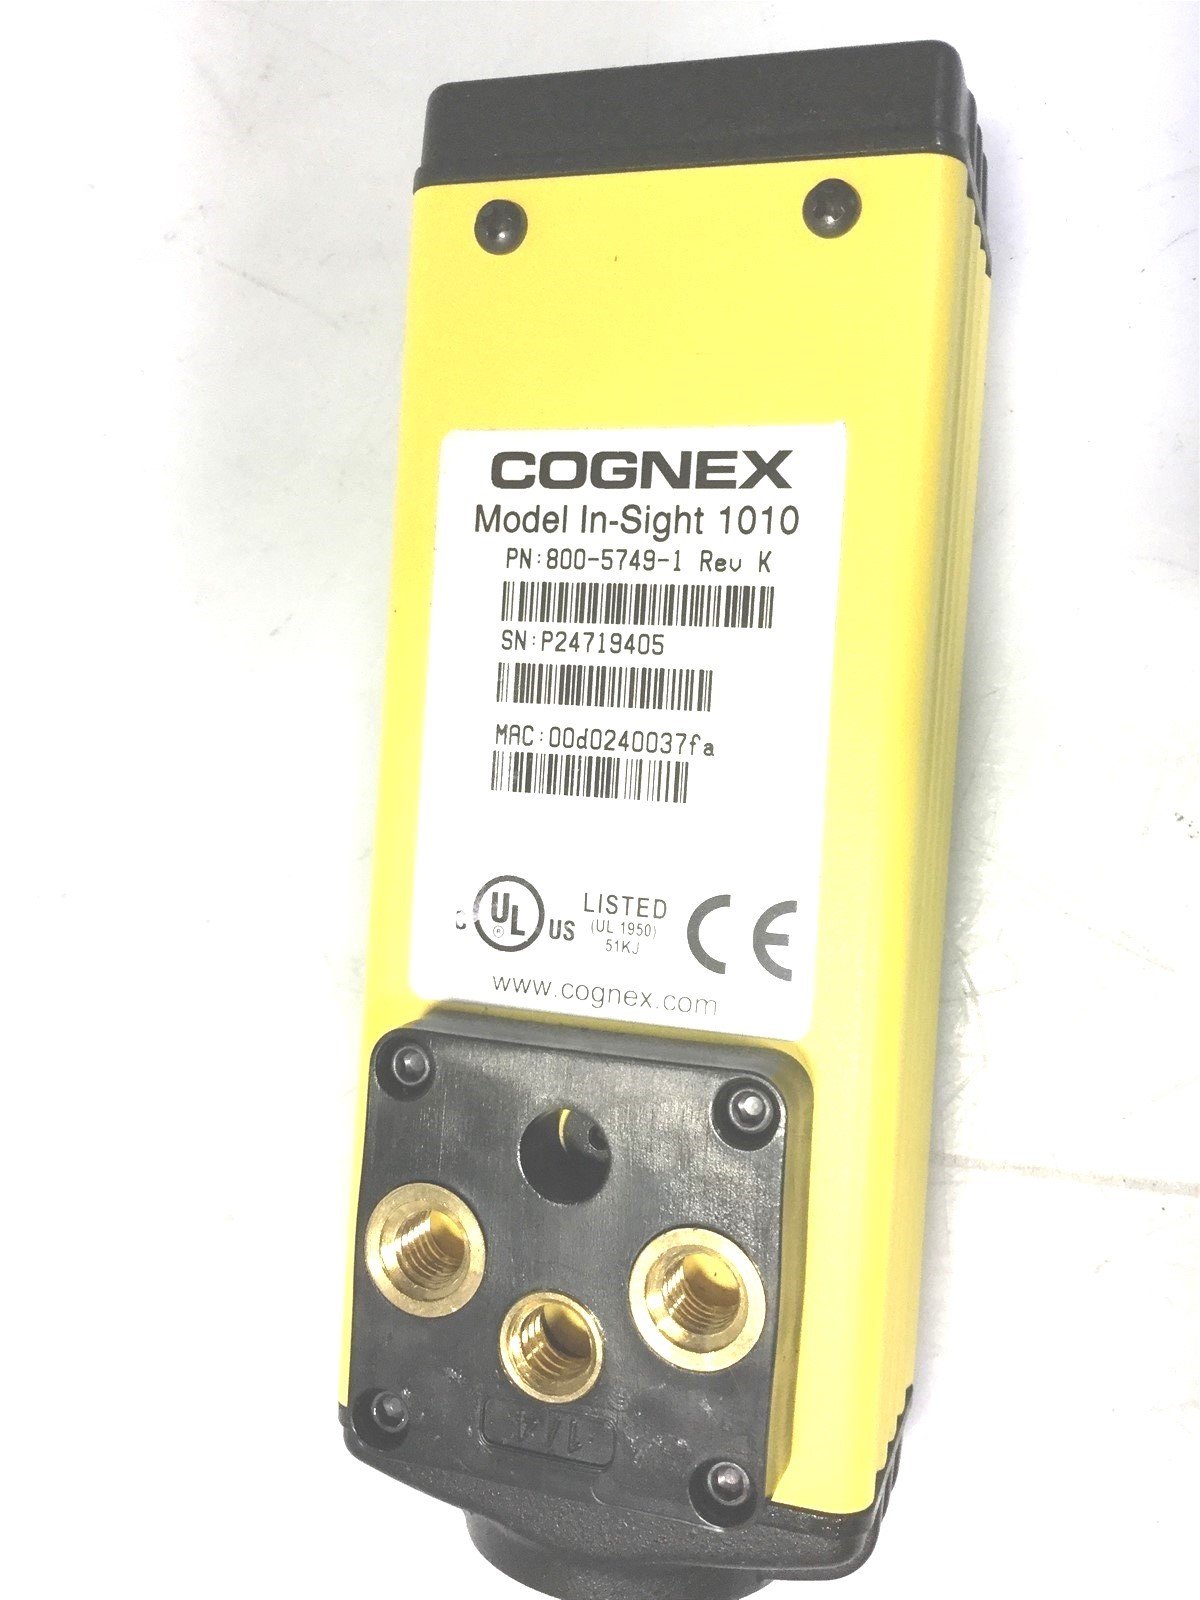 Used Cognex 800-5749-1 Rev K In-Sight 1010 Machine Vision Camera 640x480 16MB 30FPS